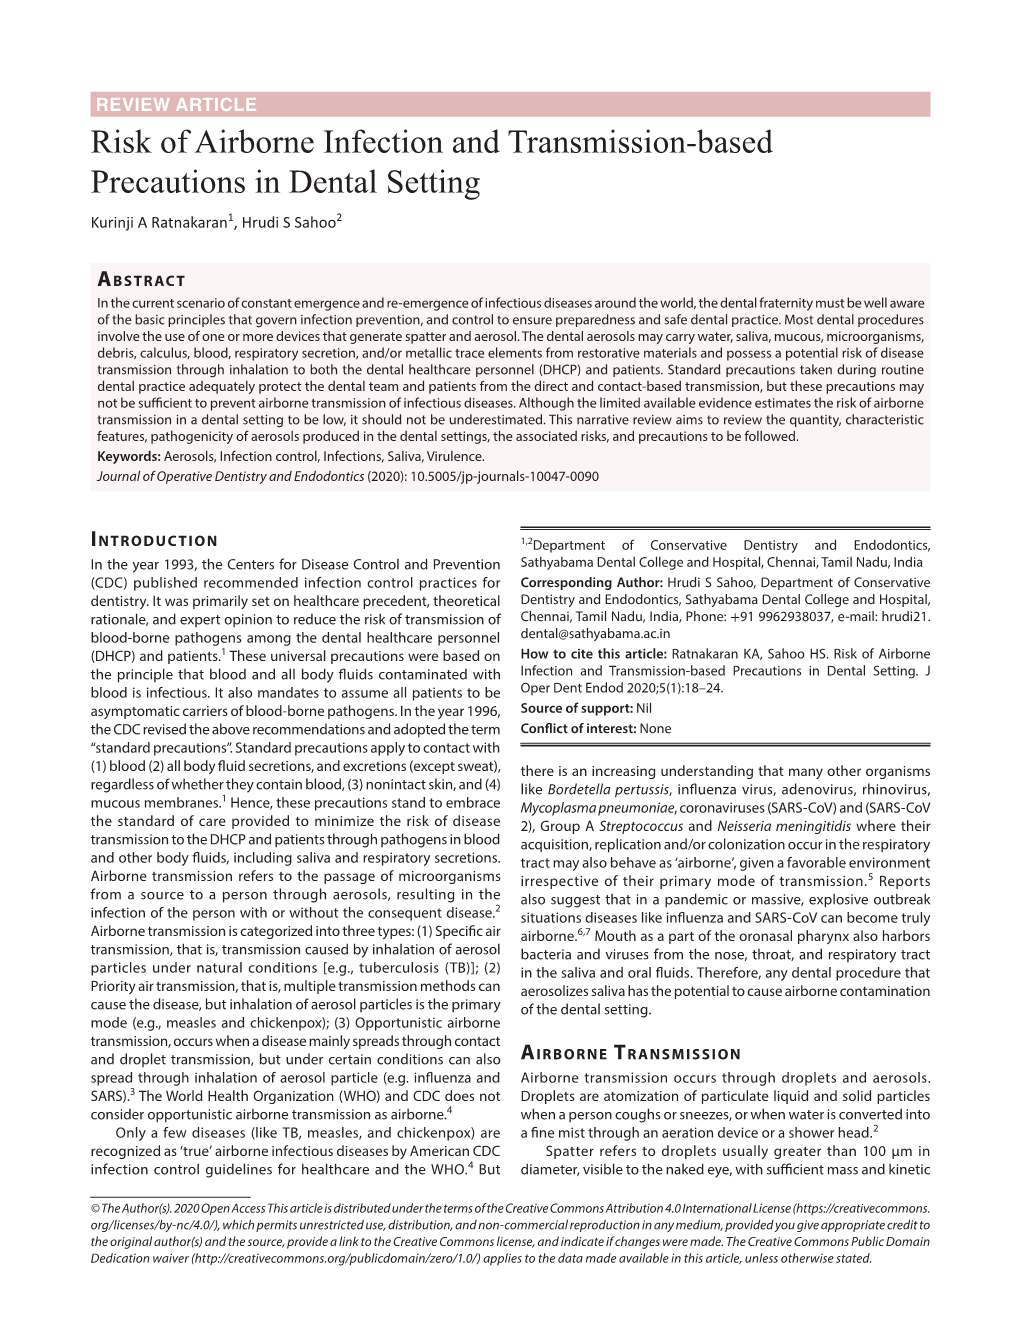 Risk of Airborne Infection and Transmission-Based Precautions in Dental Setting Kurinji a Ratnakaran1, Hrudi S Sahoo2